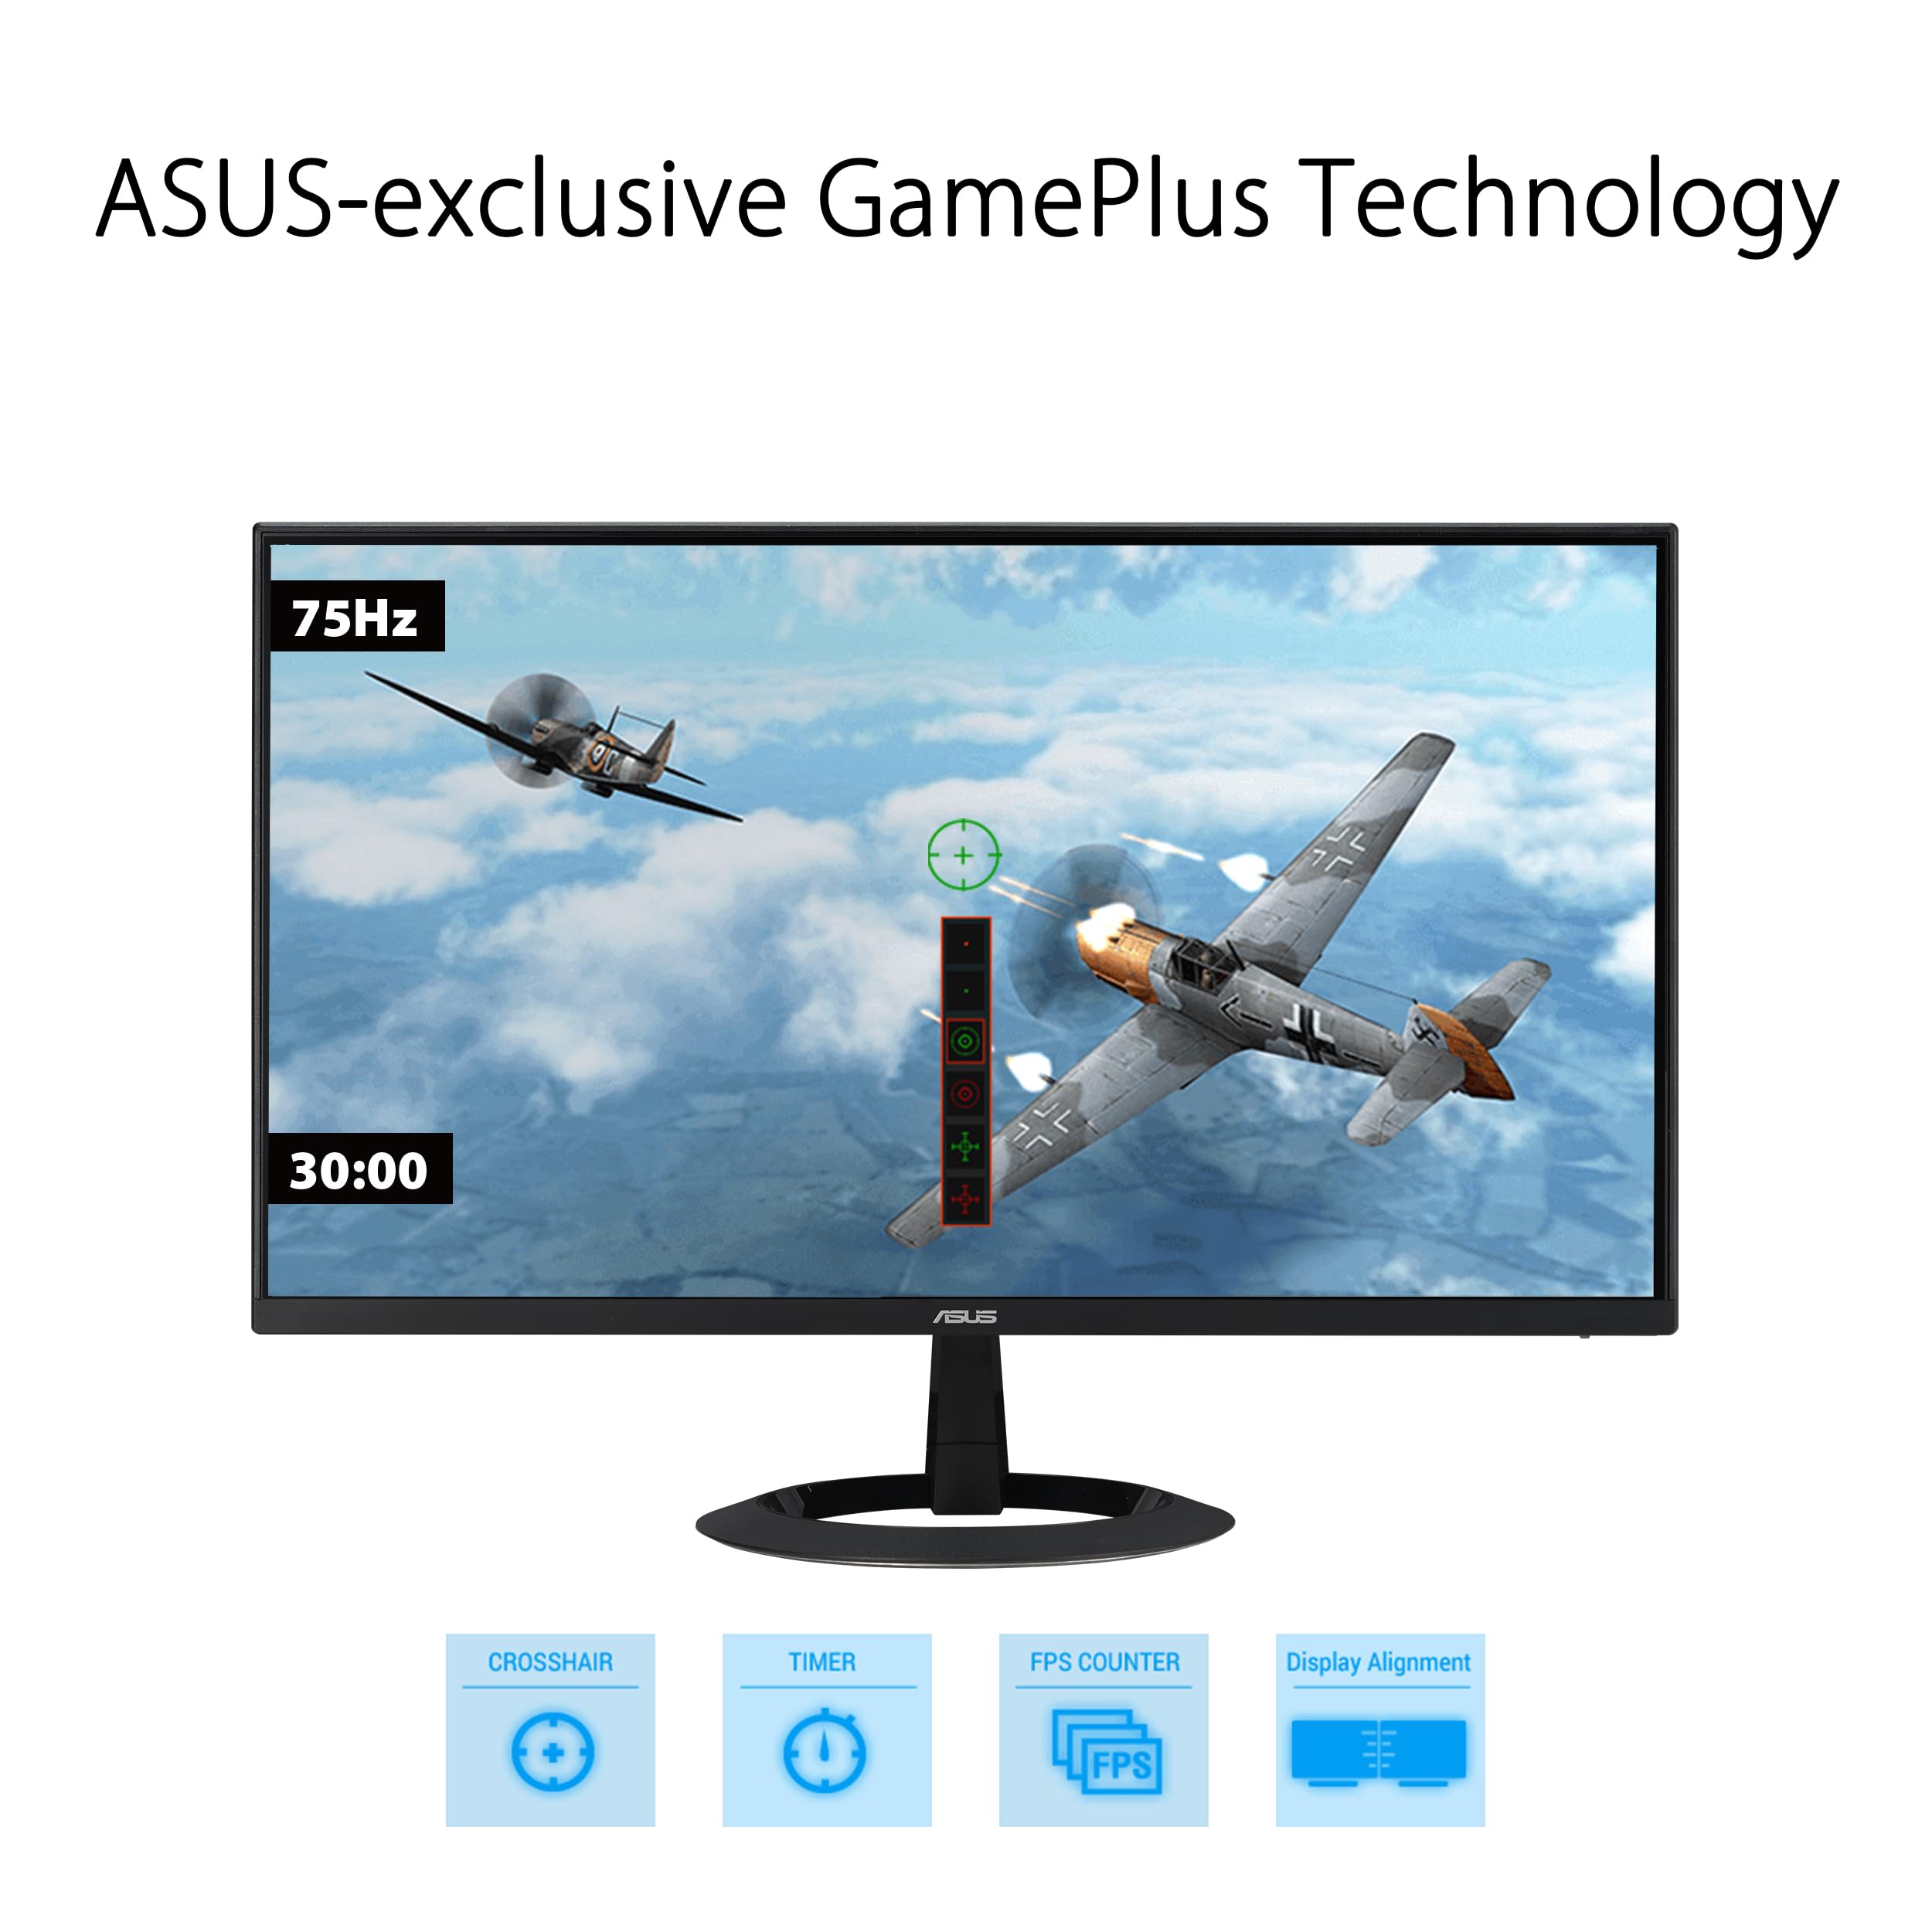 ASUS 22” (21.45” viewable) 1080P Eye Care Monitor (VZ22EHE) - Full HD, IPS, 75Hz, 1ms (MPRT), Adaptive-Sync, HDMI, Low Blue Light, Flicker Free, HDMI, VGA, Ultra-Slim,Black